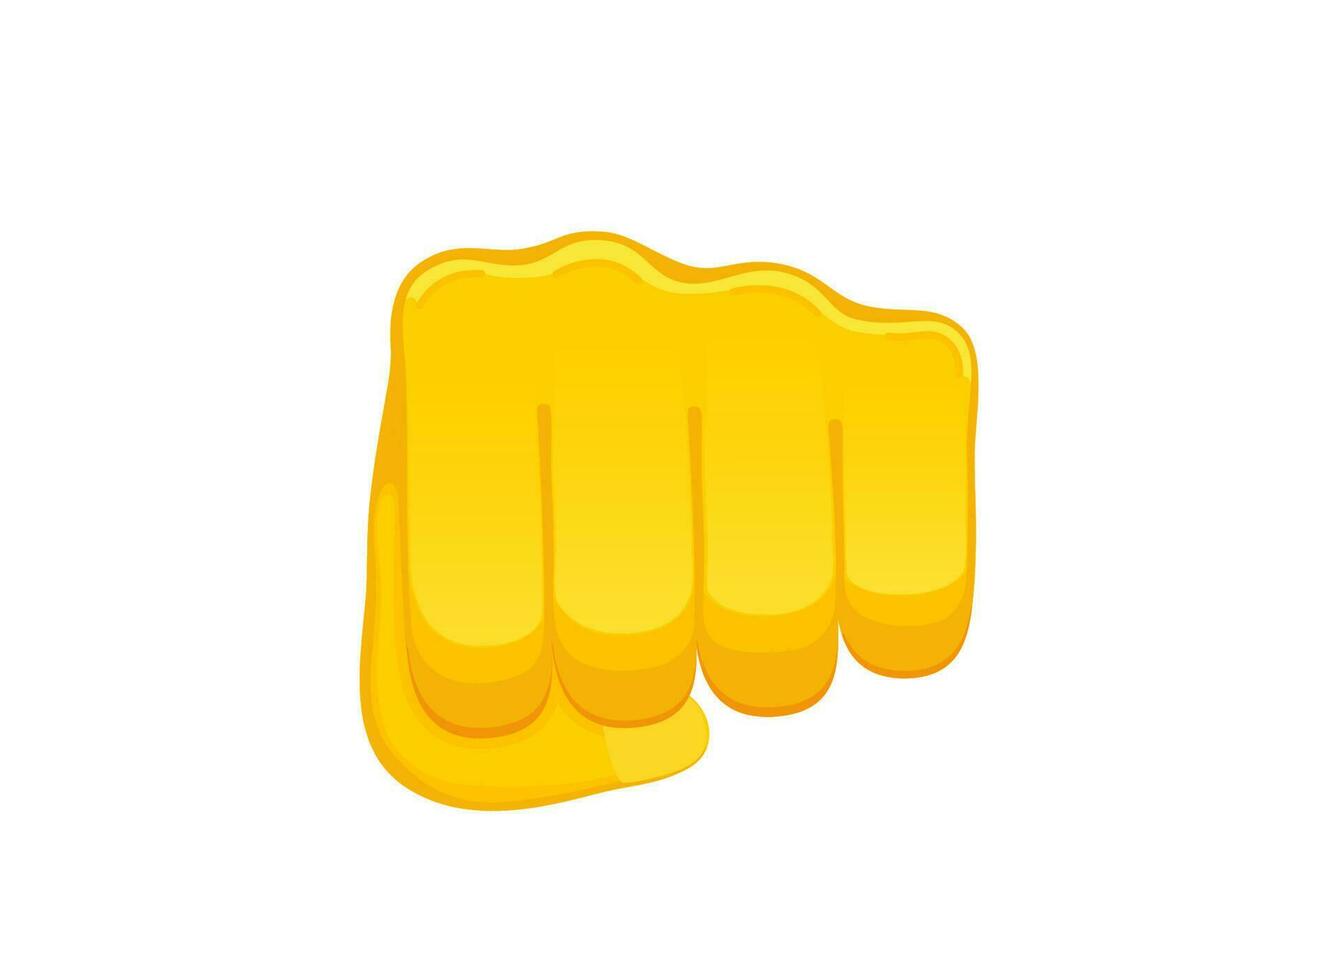 approche poing icône. main geste emoji vecteur illustration